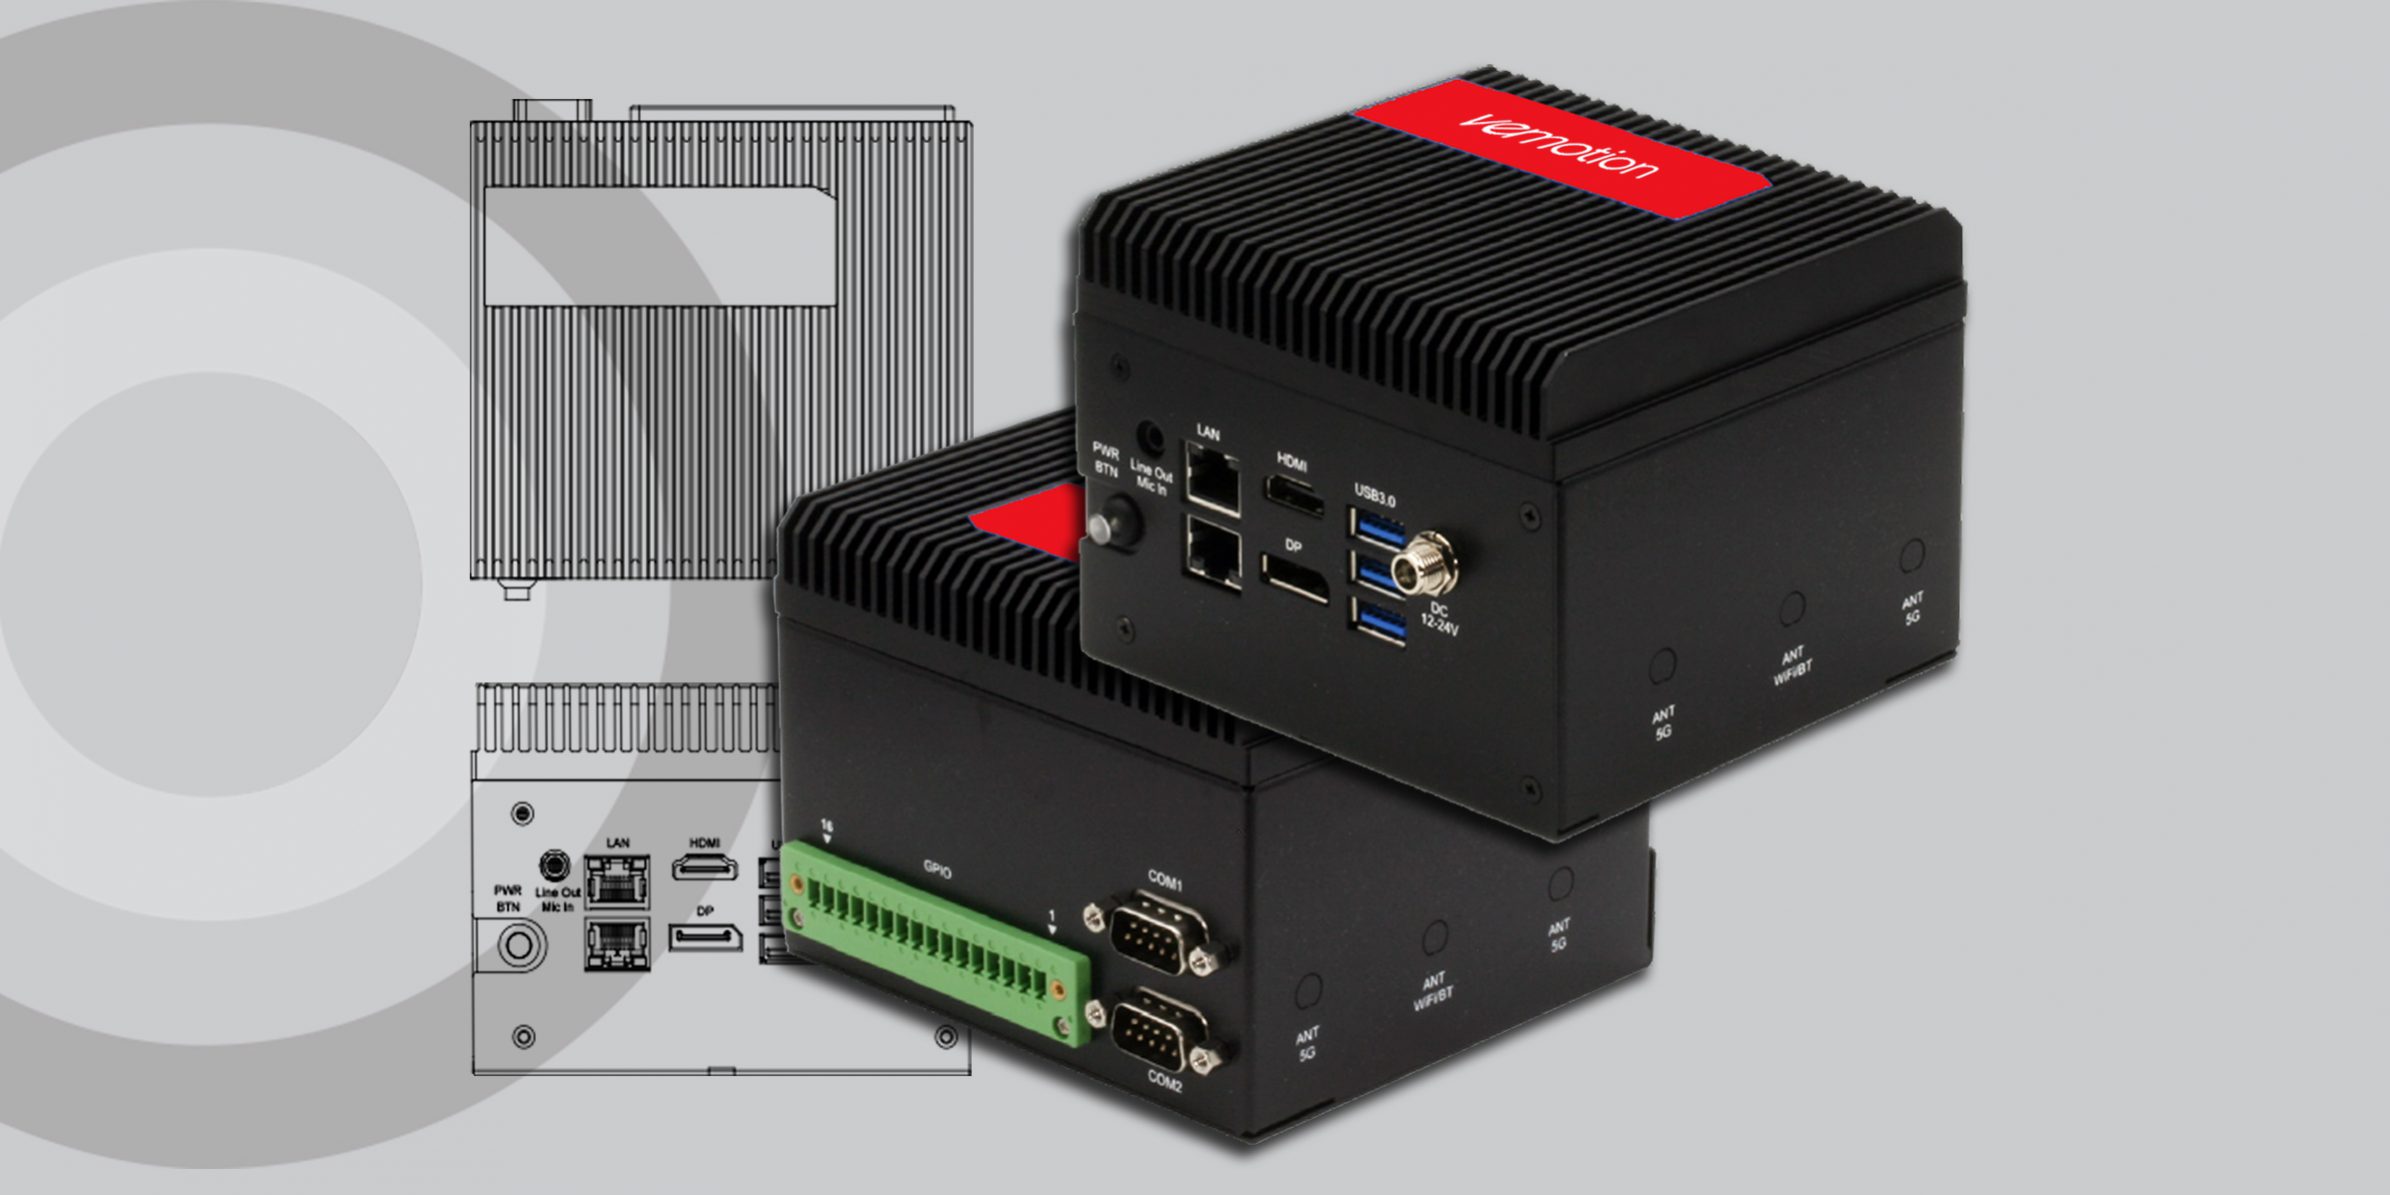 Next generation VB-300u compact industrial hybrid streaming encoder